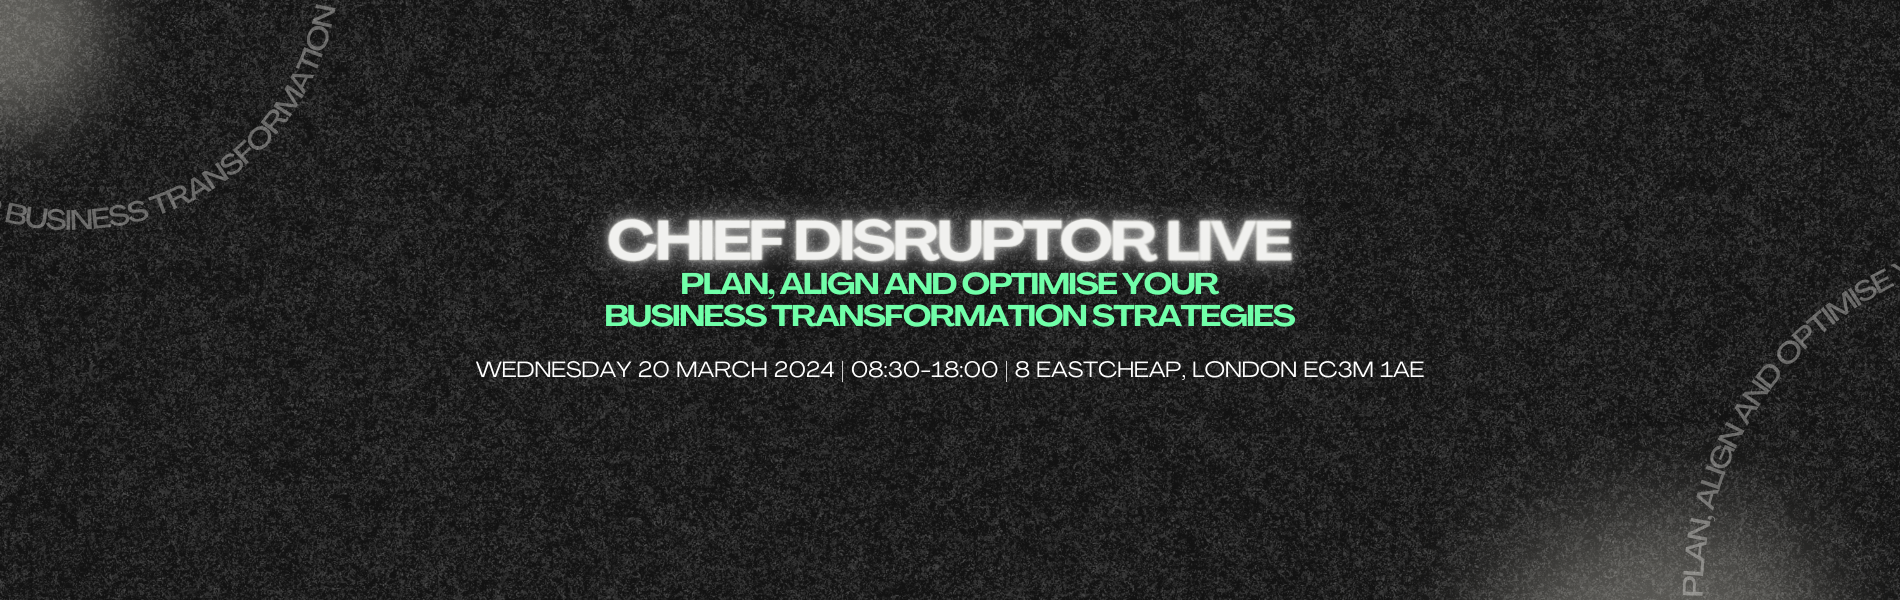 Chief Disruptor LIVE